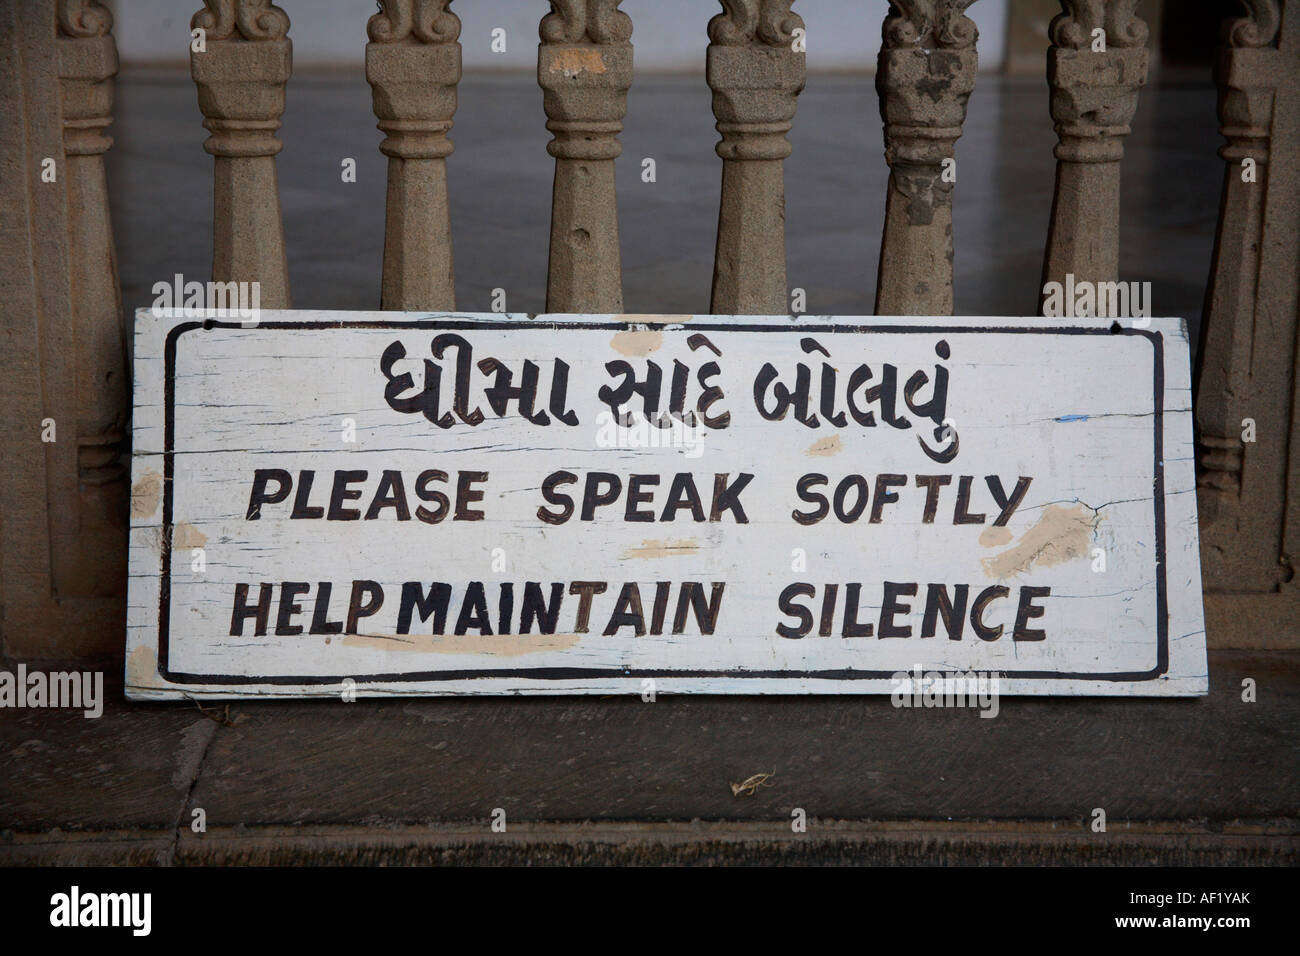 Public notice at Vijay Vilas Palace asking visitors to 'Please speak softly help maintain silence', Mandvi, Gujarat, India Stock Photo